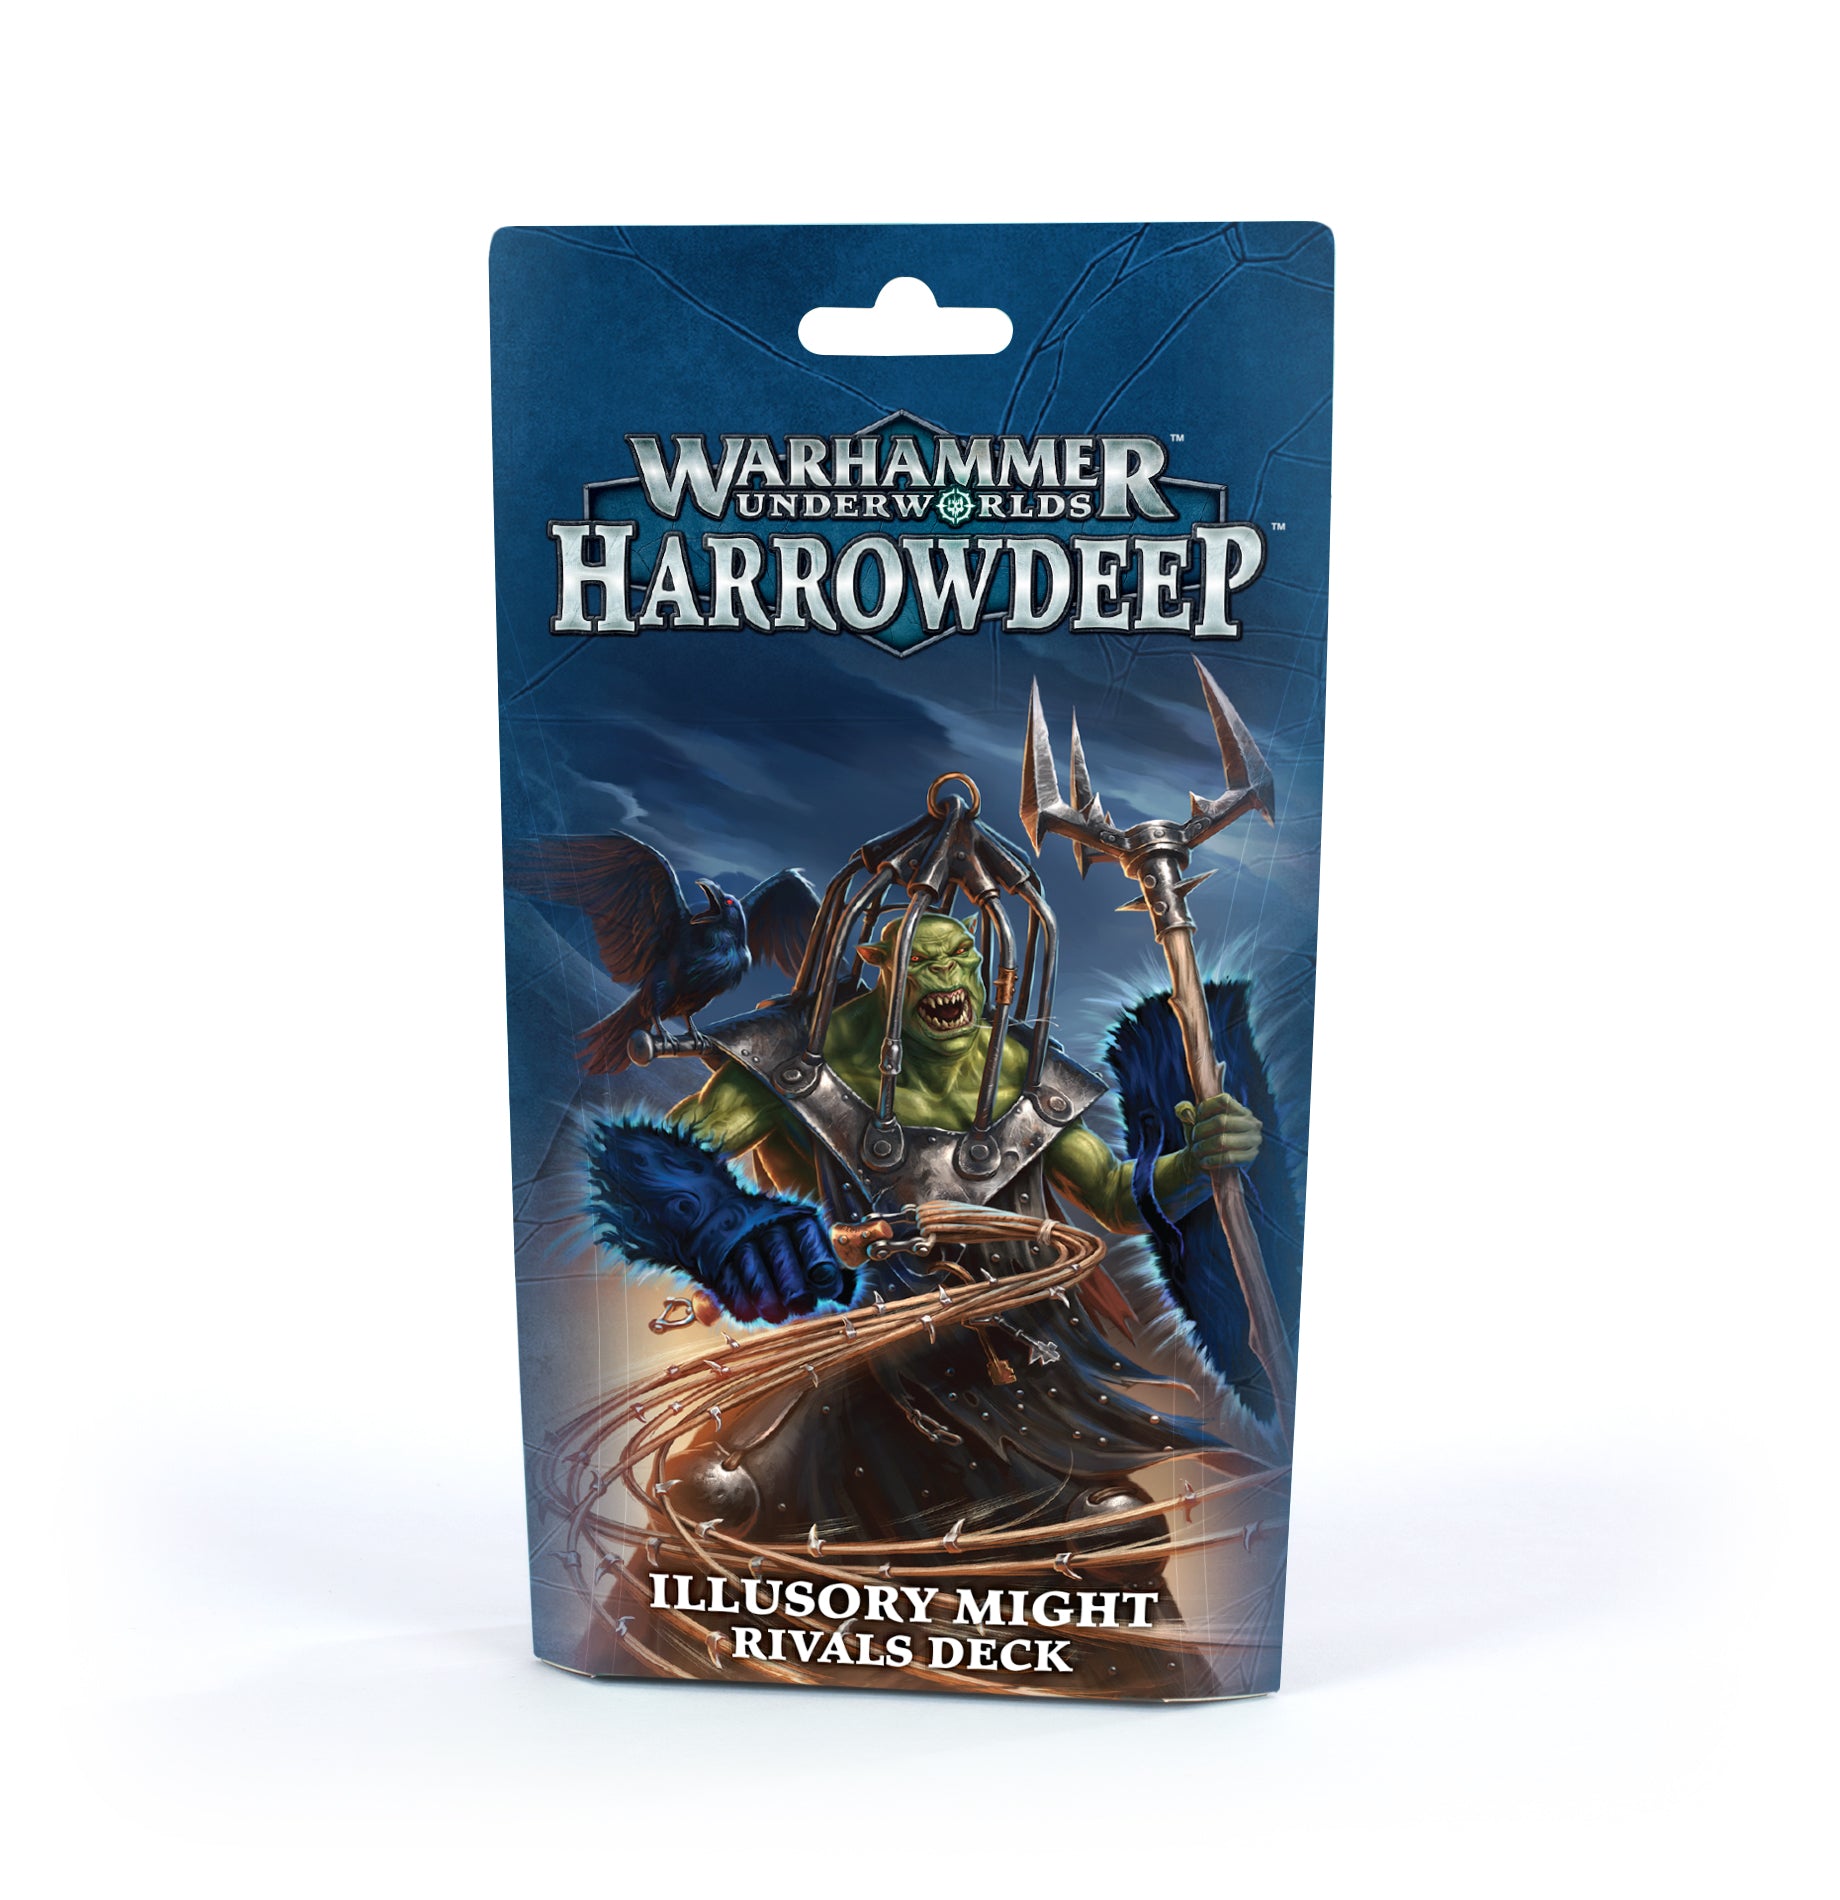 Warhammer Underworlds: Harrowdeep: Illusory Might Rivals Deck